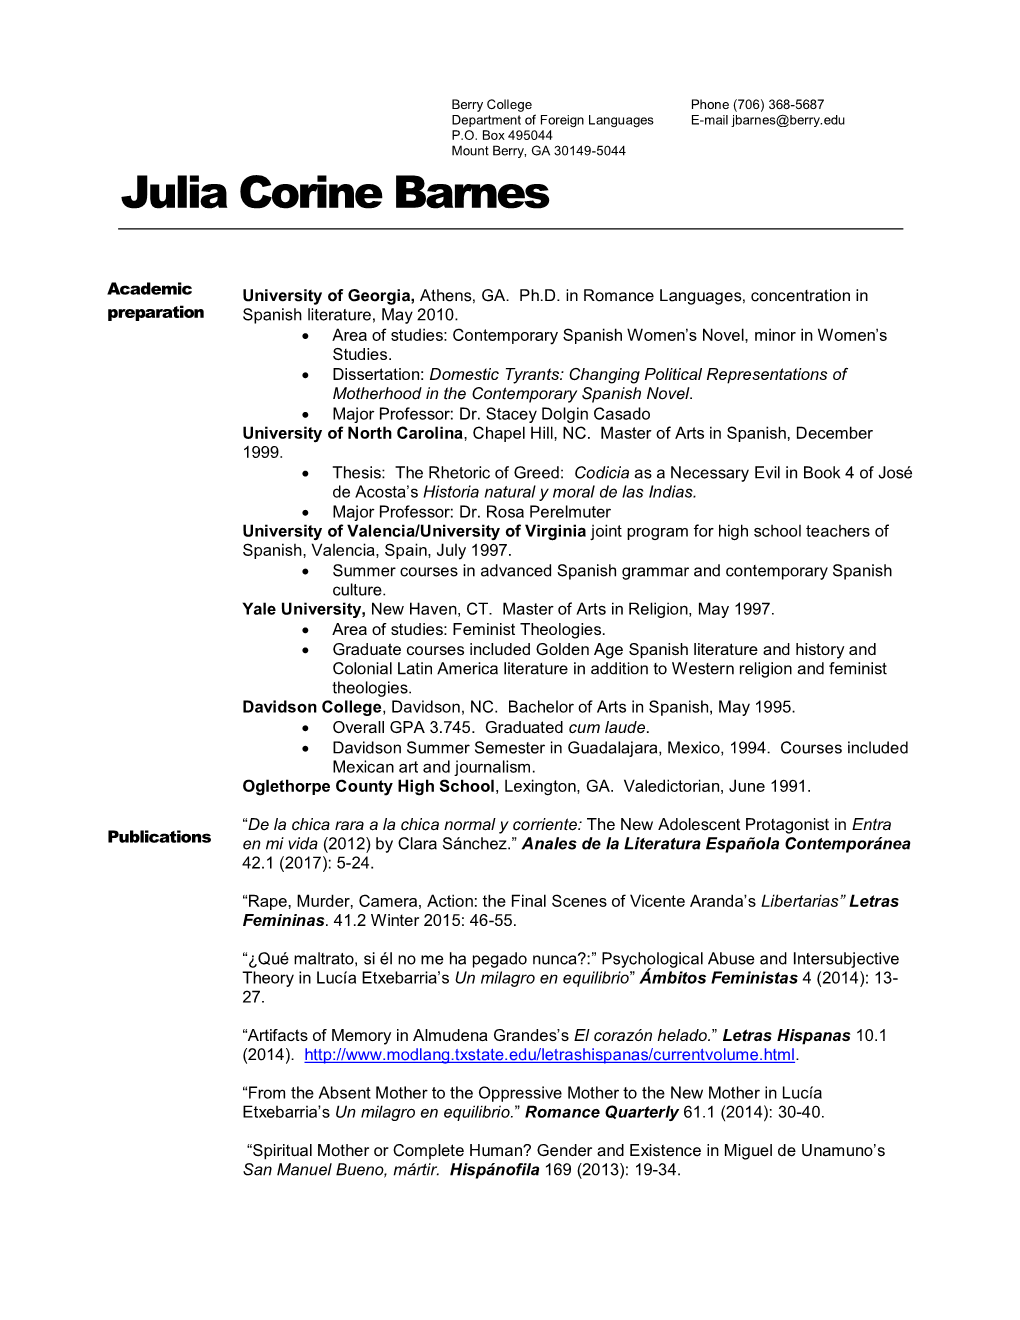 Julia Corine Barnes